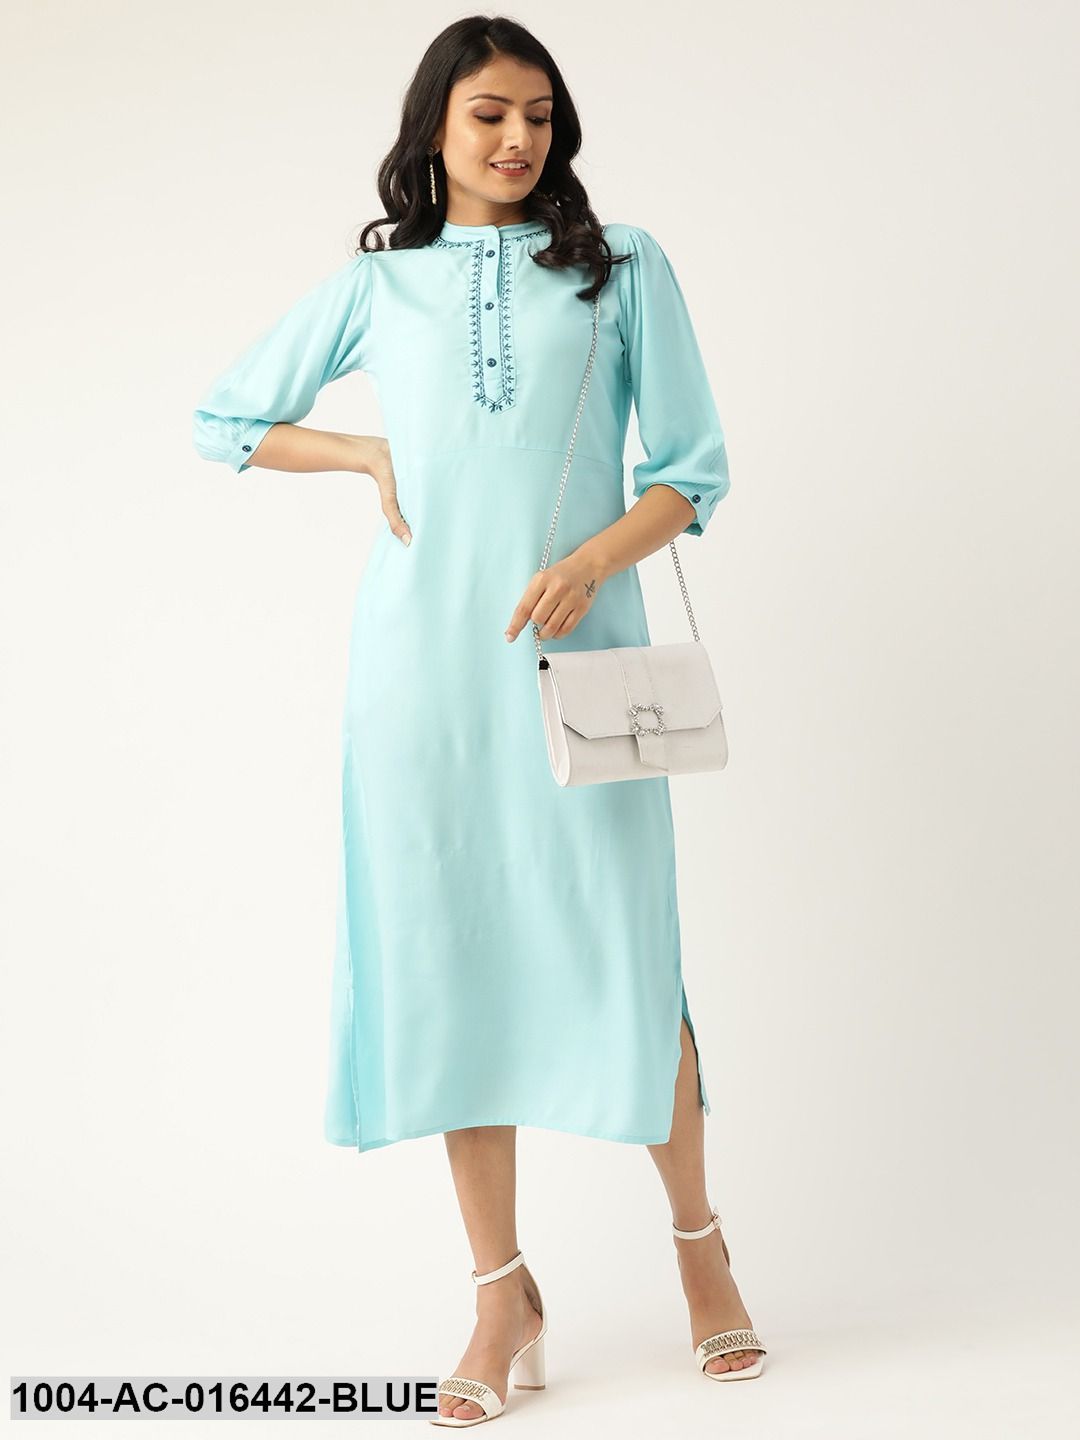 Blue Solid Solid Mandarin Collar Viscose Rayon A-Line Dress